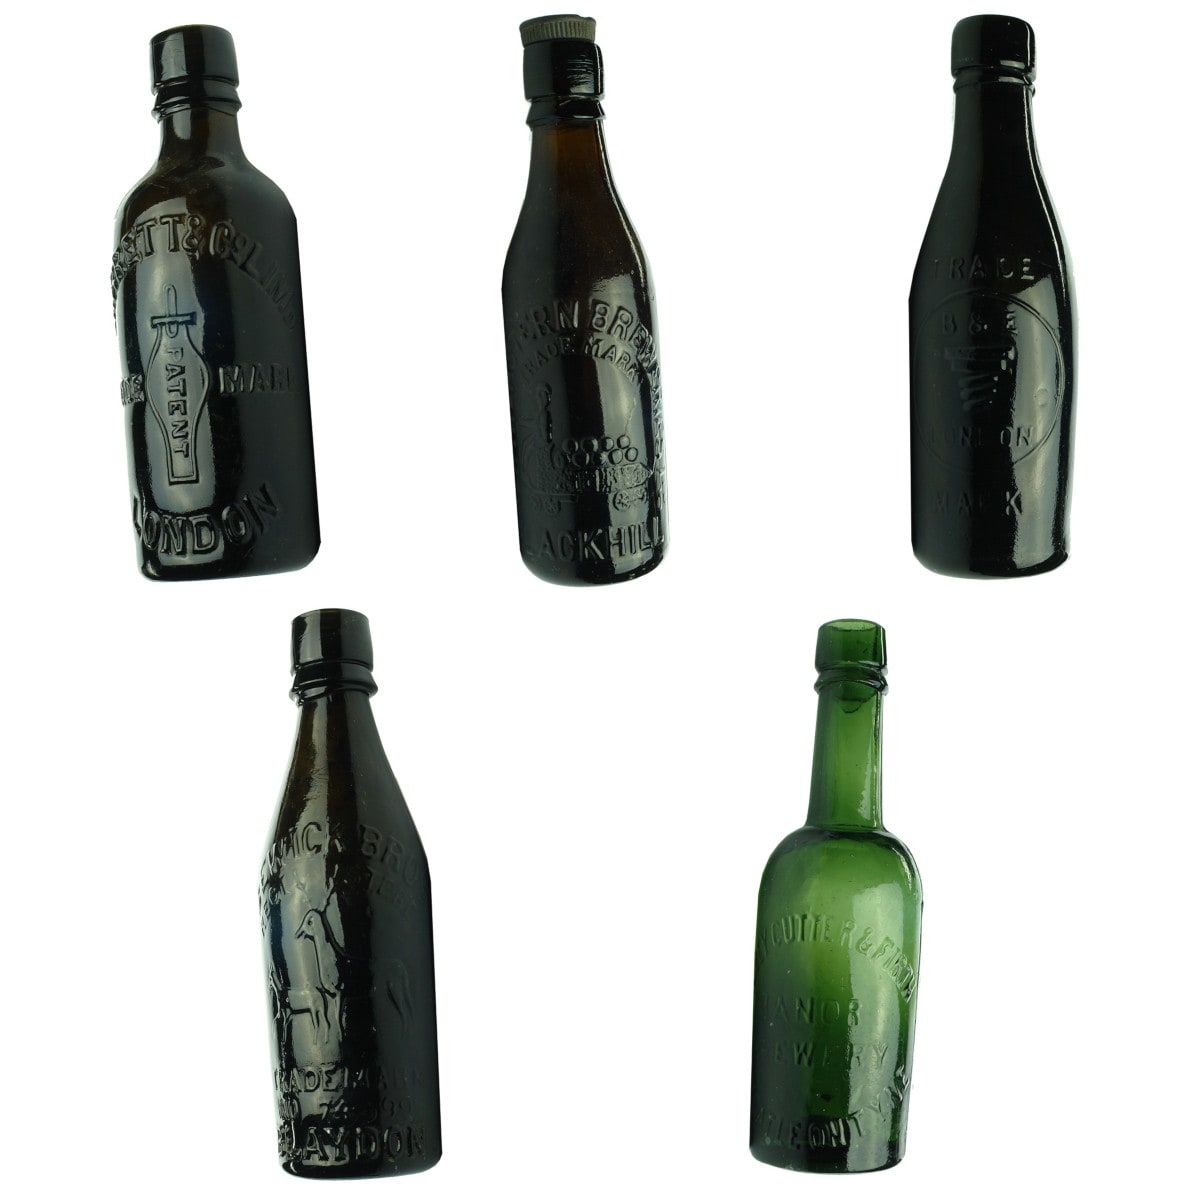 5 English Bottles. Barrett & Co Limd, London; North Eastern Breweries Ltd, Blackhill; Barrett & Elers, London; Bewick Bros, Blaydon; Ridley Cutter & Firth, Newcastle on Tyne.